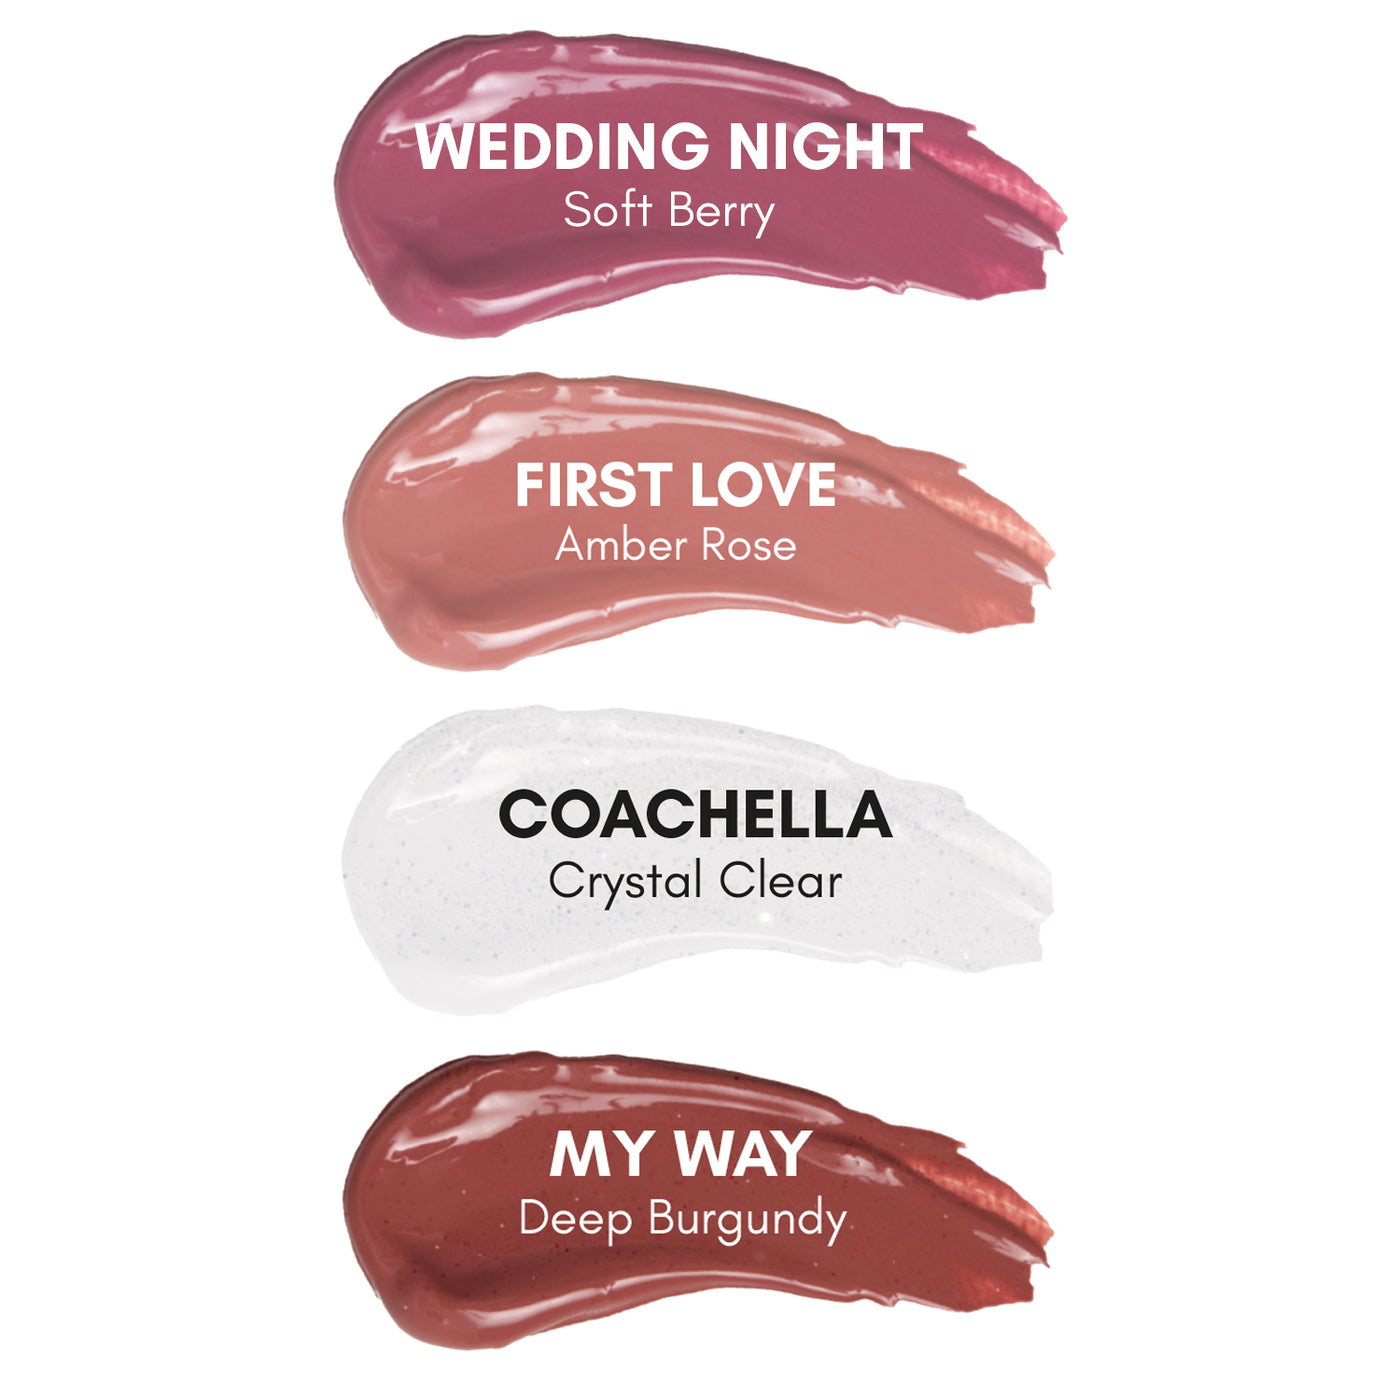 Wedding Night - Soft Berry Lip Gloss